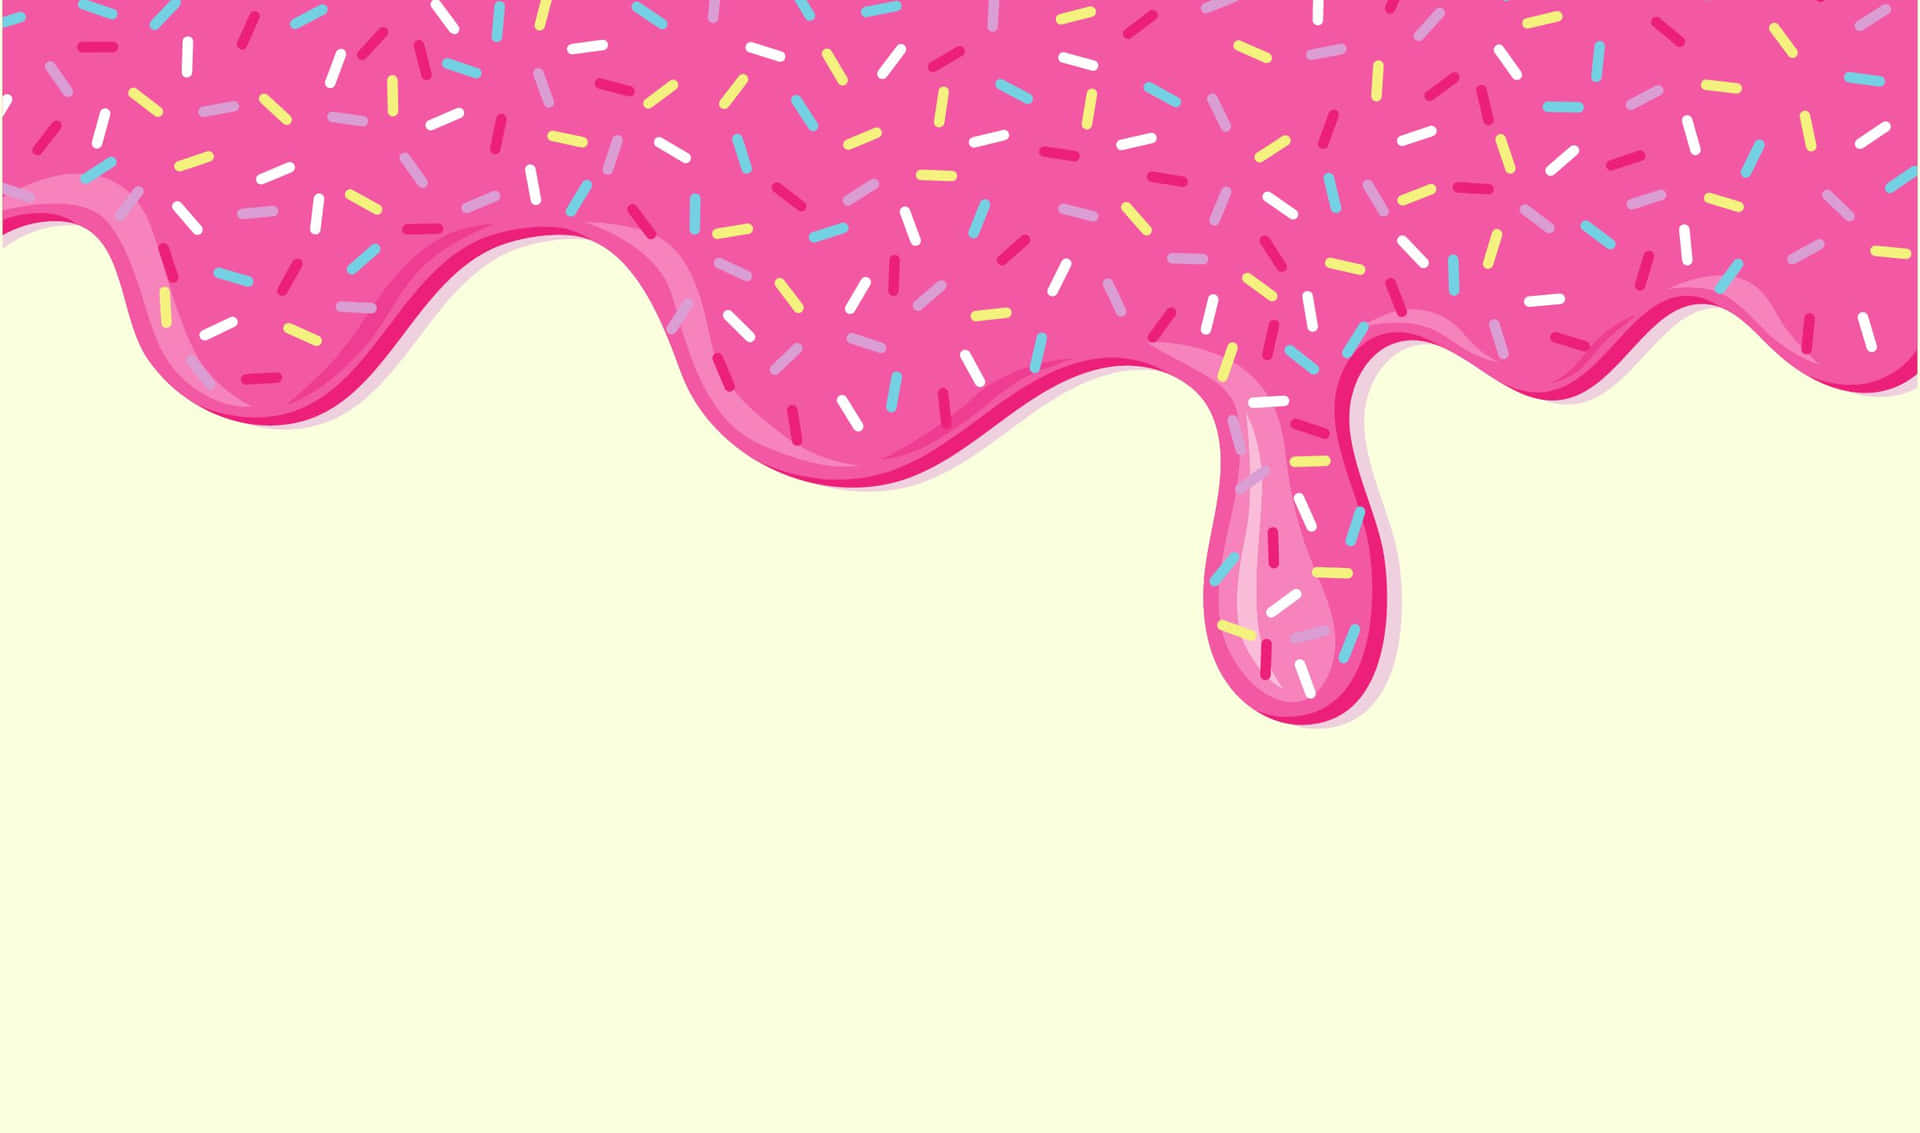 Sprinkles wallpaper Vectors  Illustrations for Free Download  Freepik